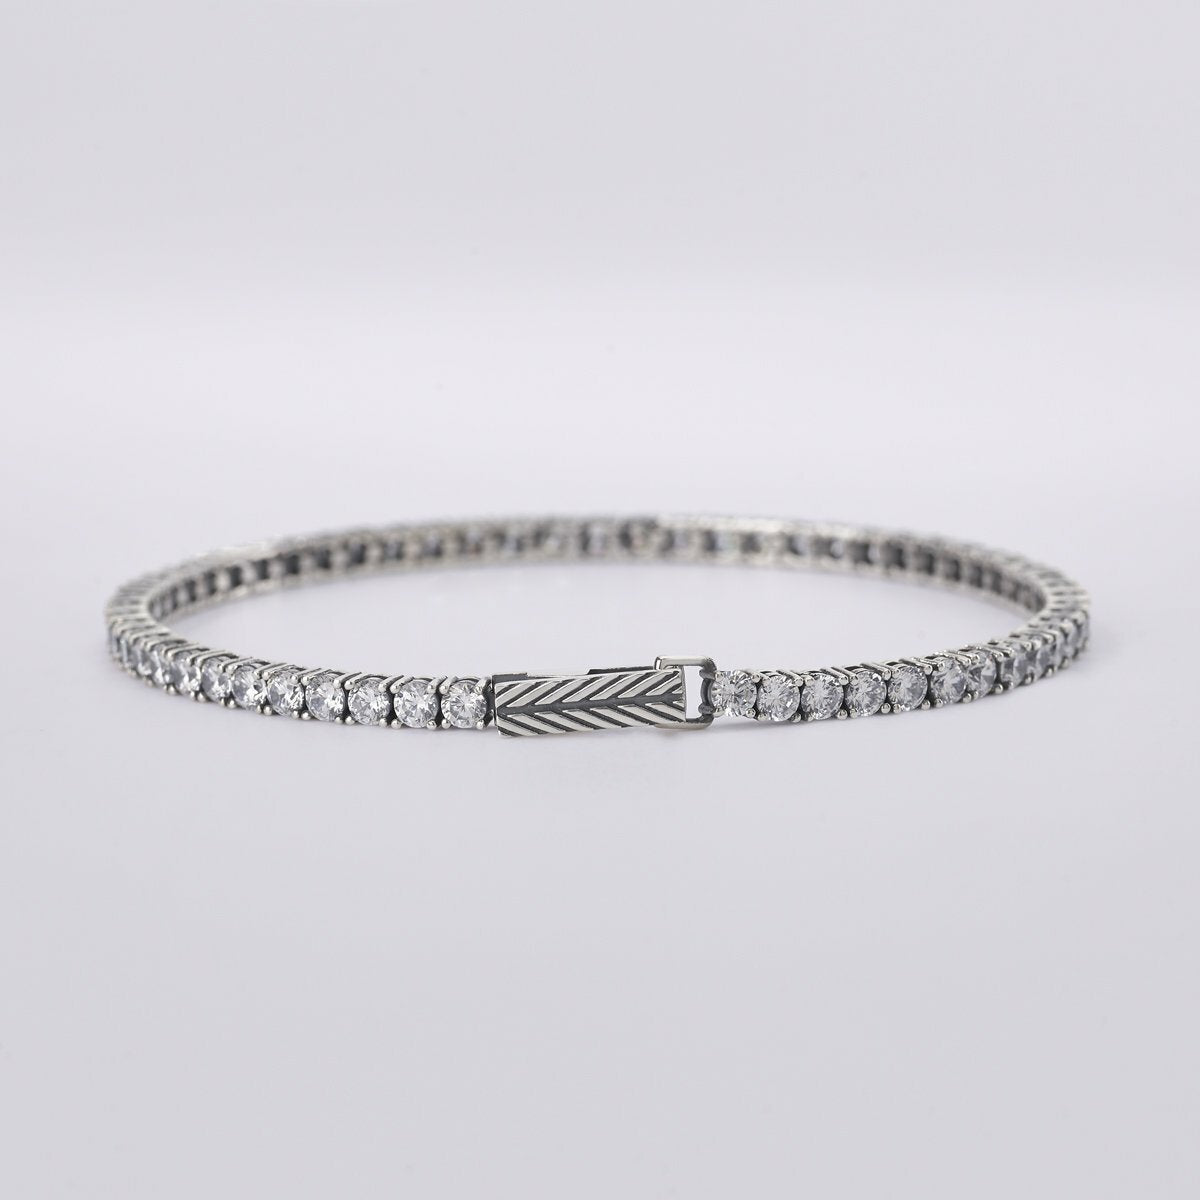 Men's Tennis Bracelet in silver Mabina Gioielli 533436-S